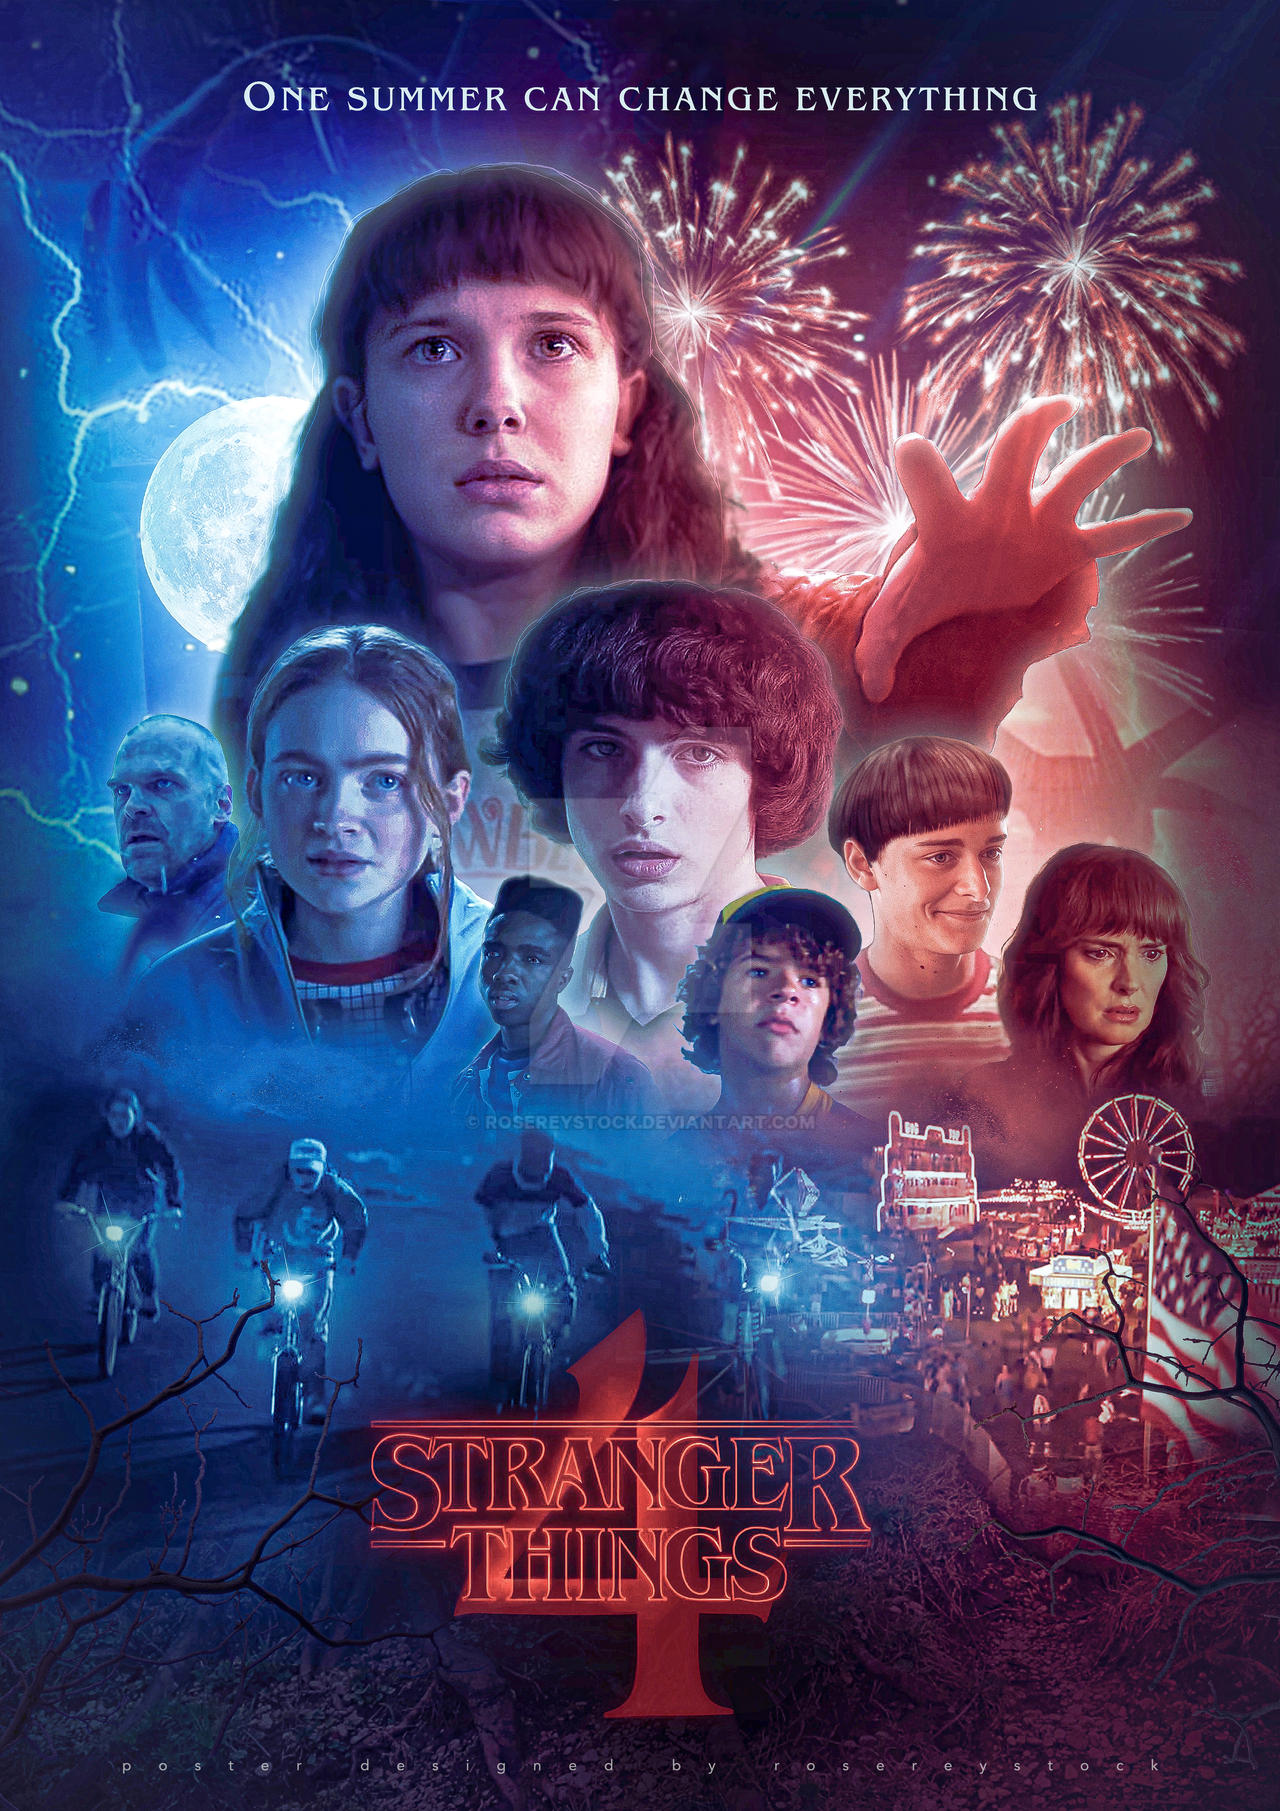 Stranger Things season 4 - poster by Rosereystock on DeviantArt